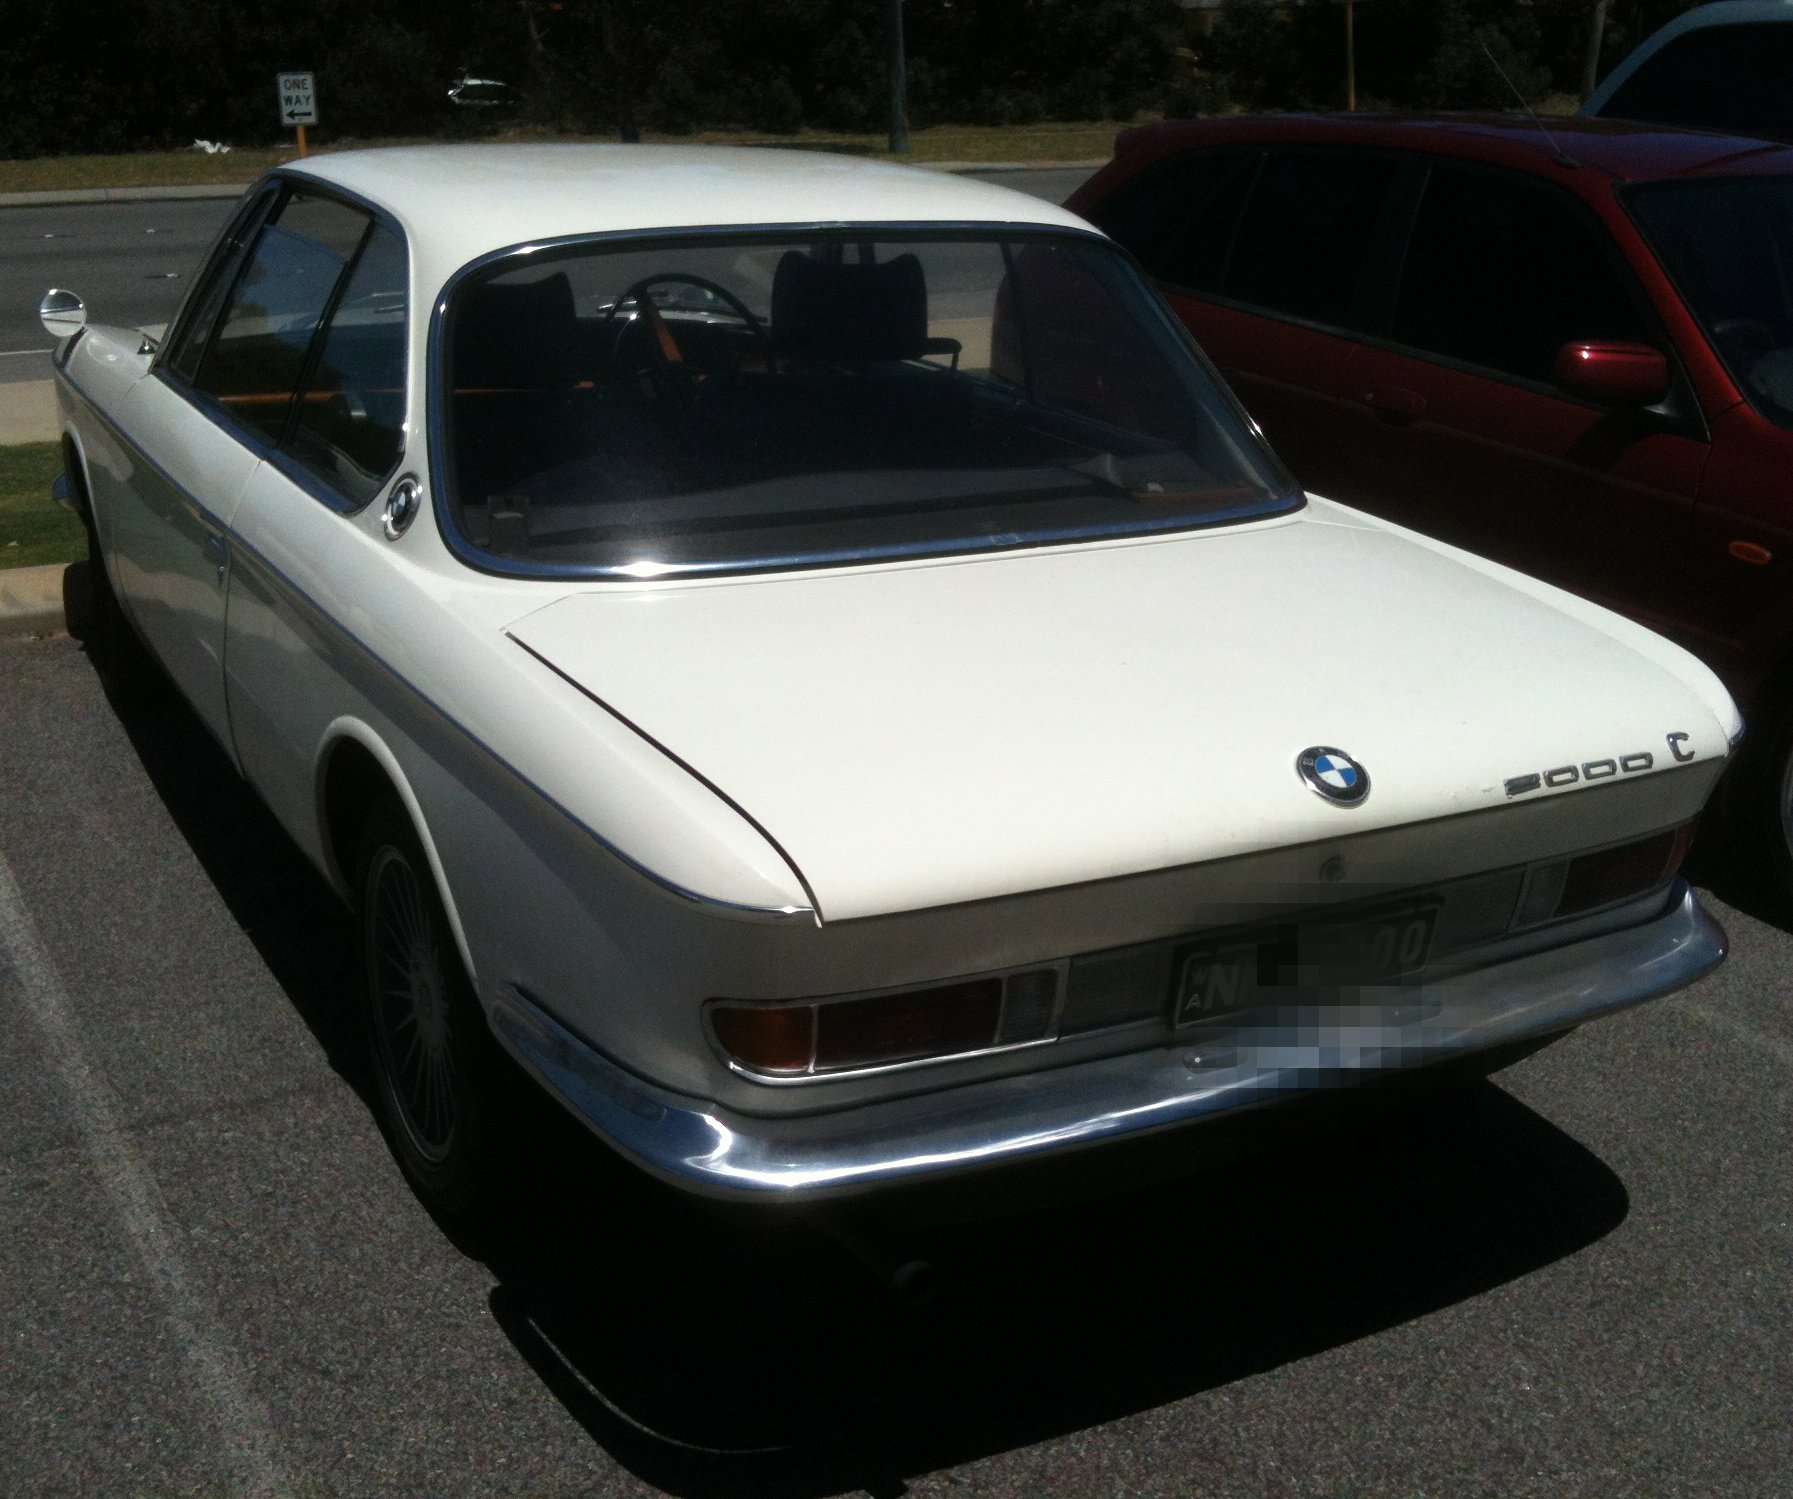 BMW 2000 C (Rear) | Flickr - Photo Sharing!